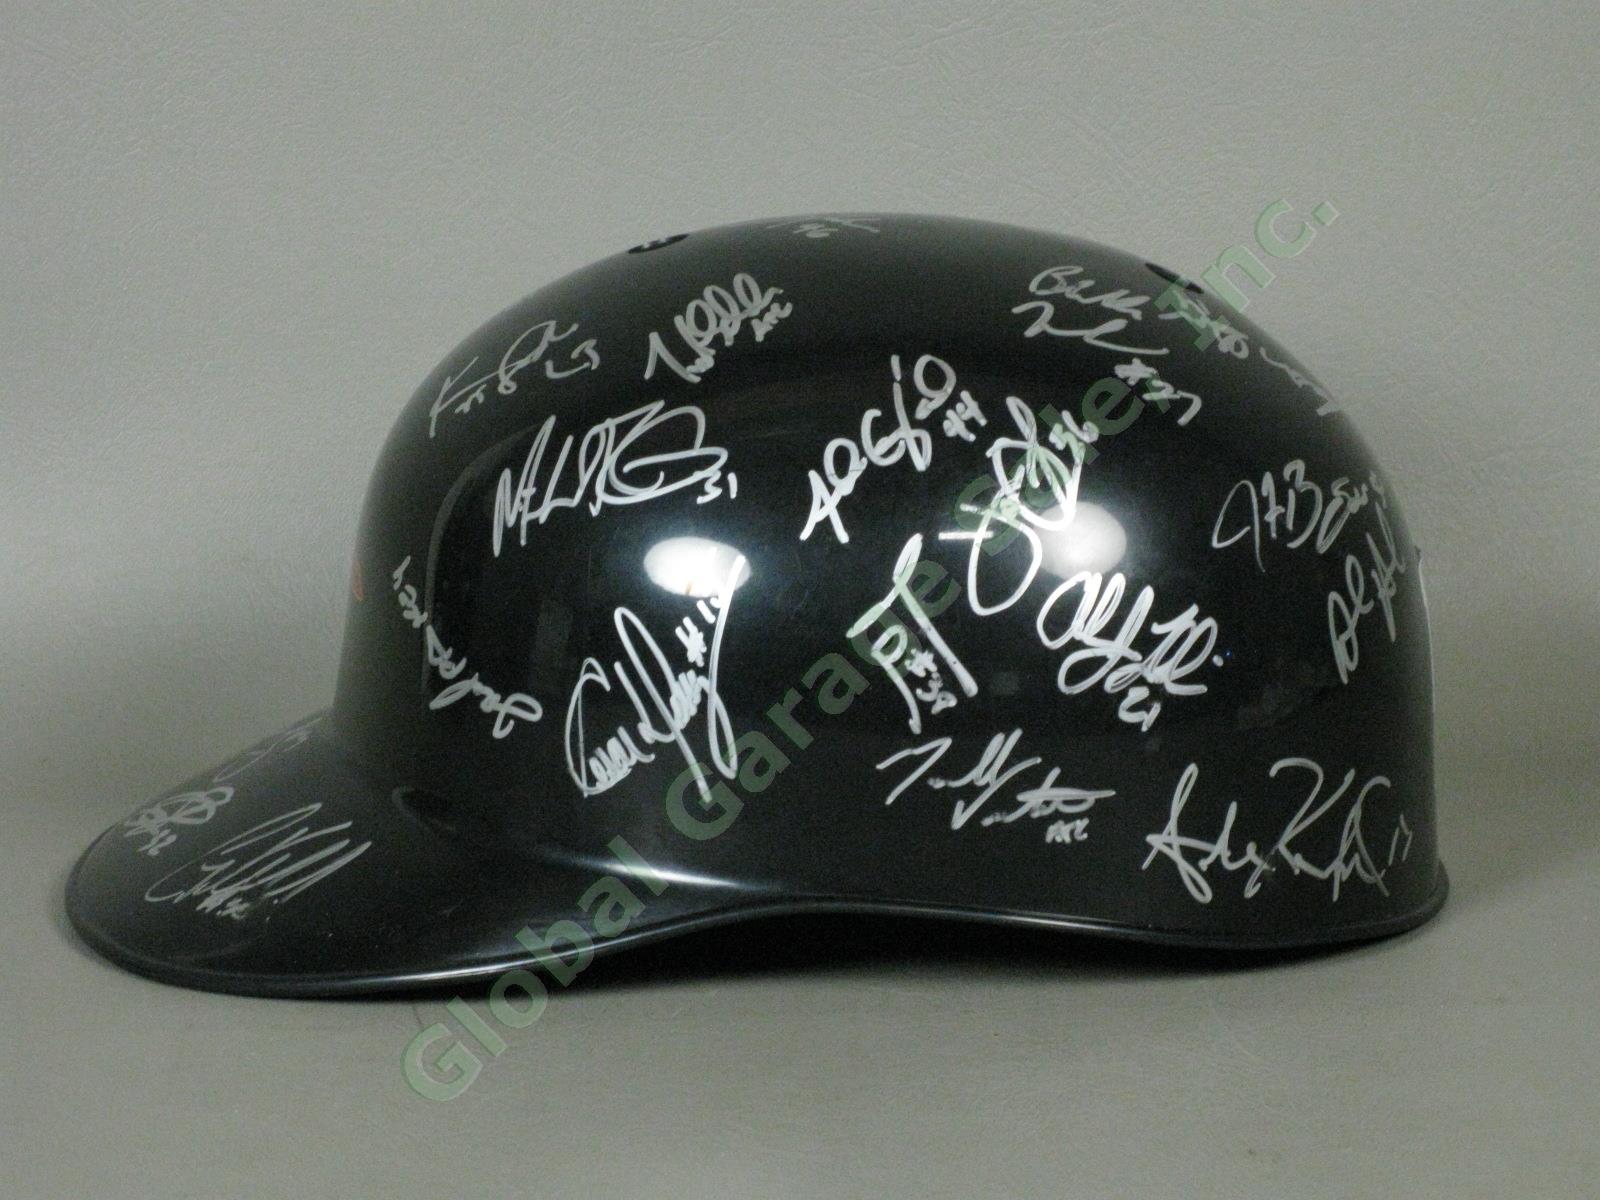 2010 Aberdeen Ironbirds Team Signed Baseball Helmet NYPL Baltimore Orioles NR 3